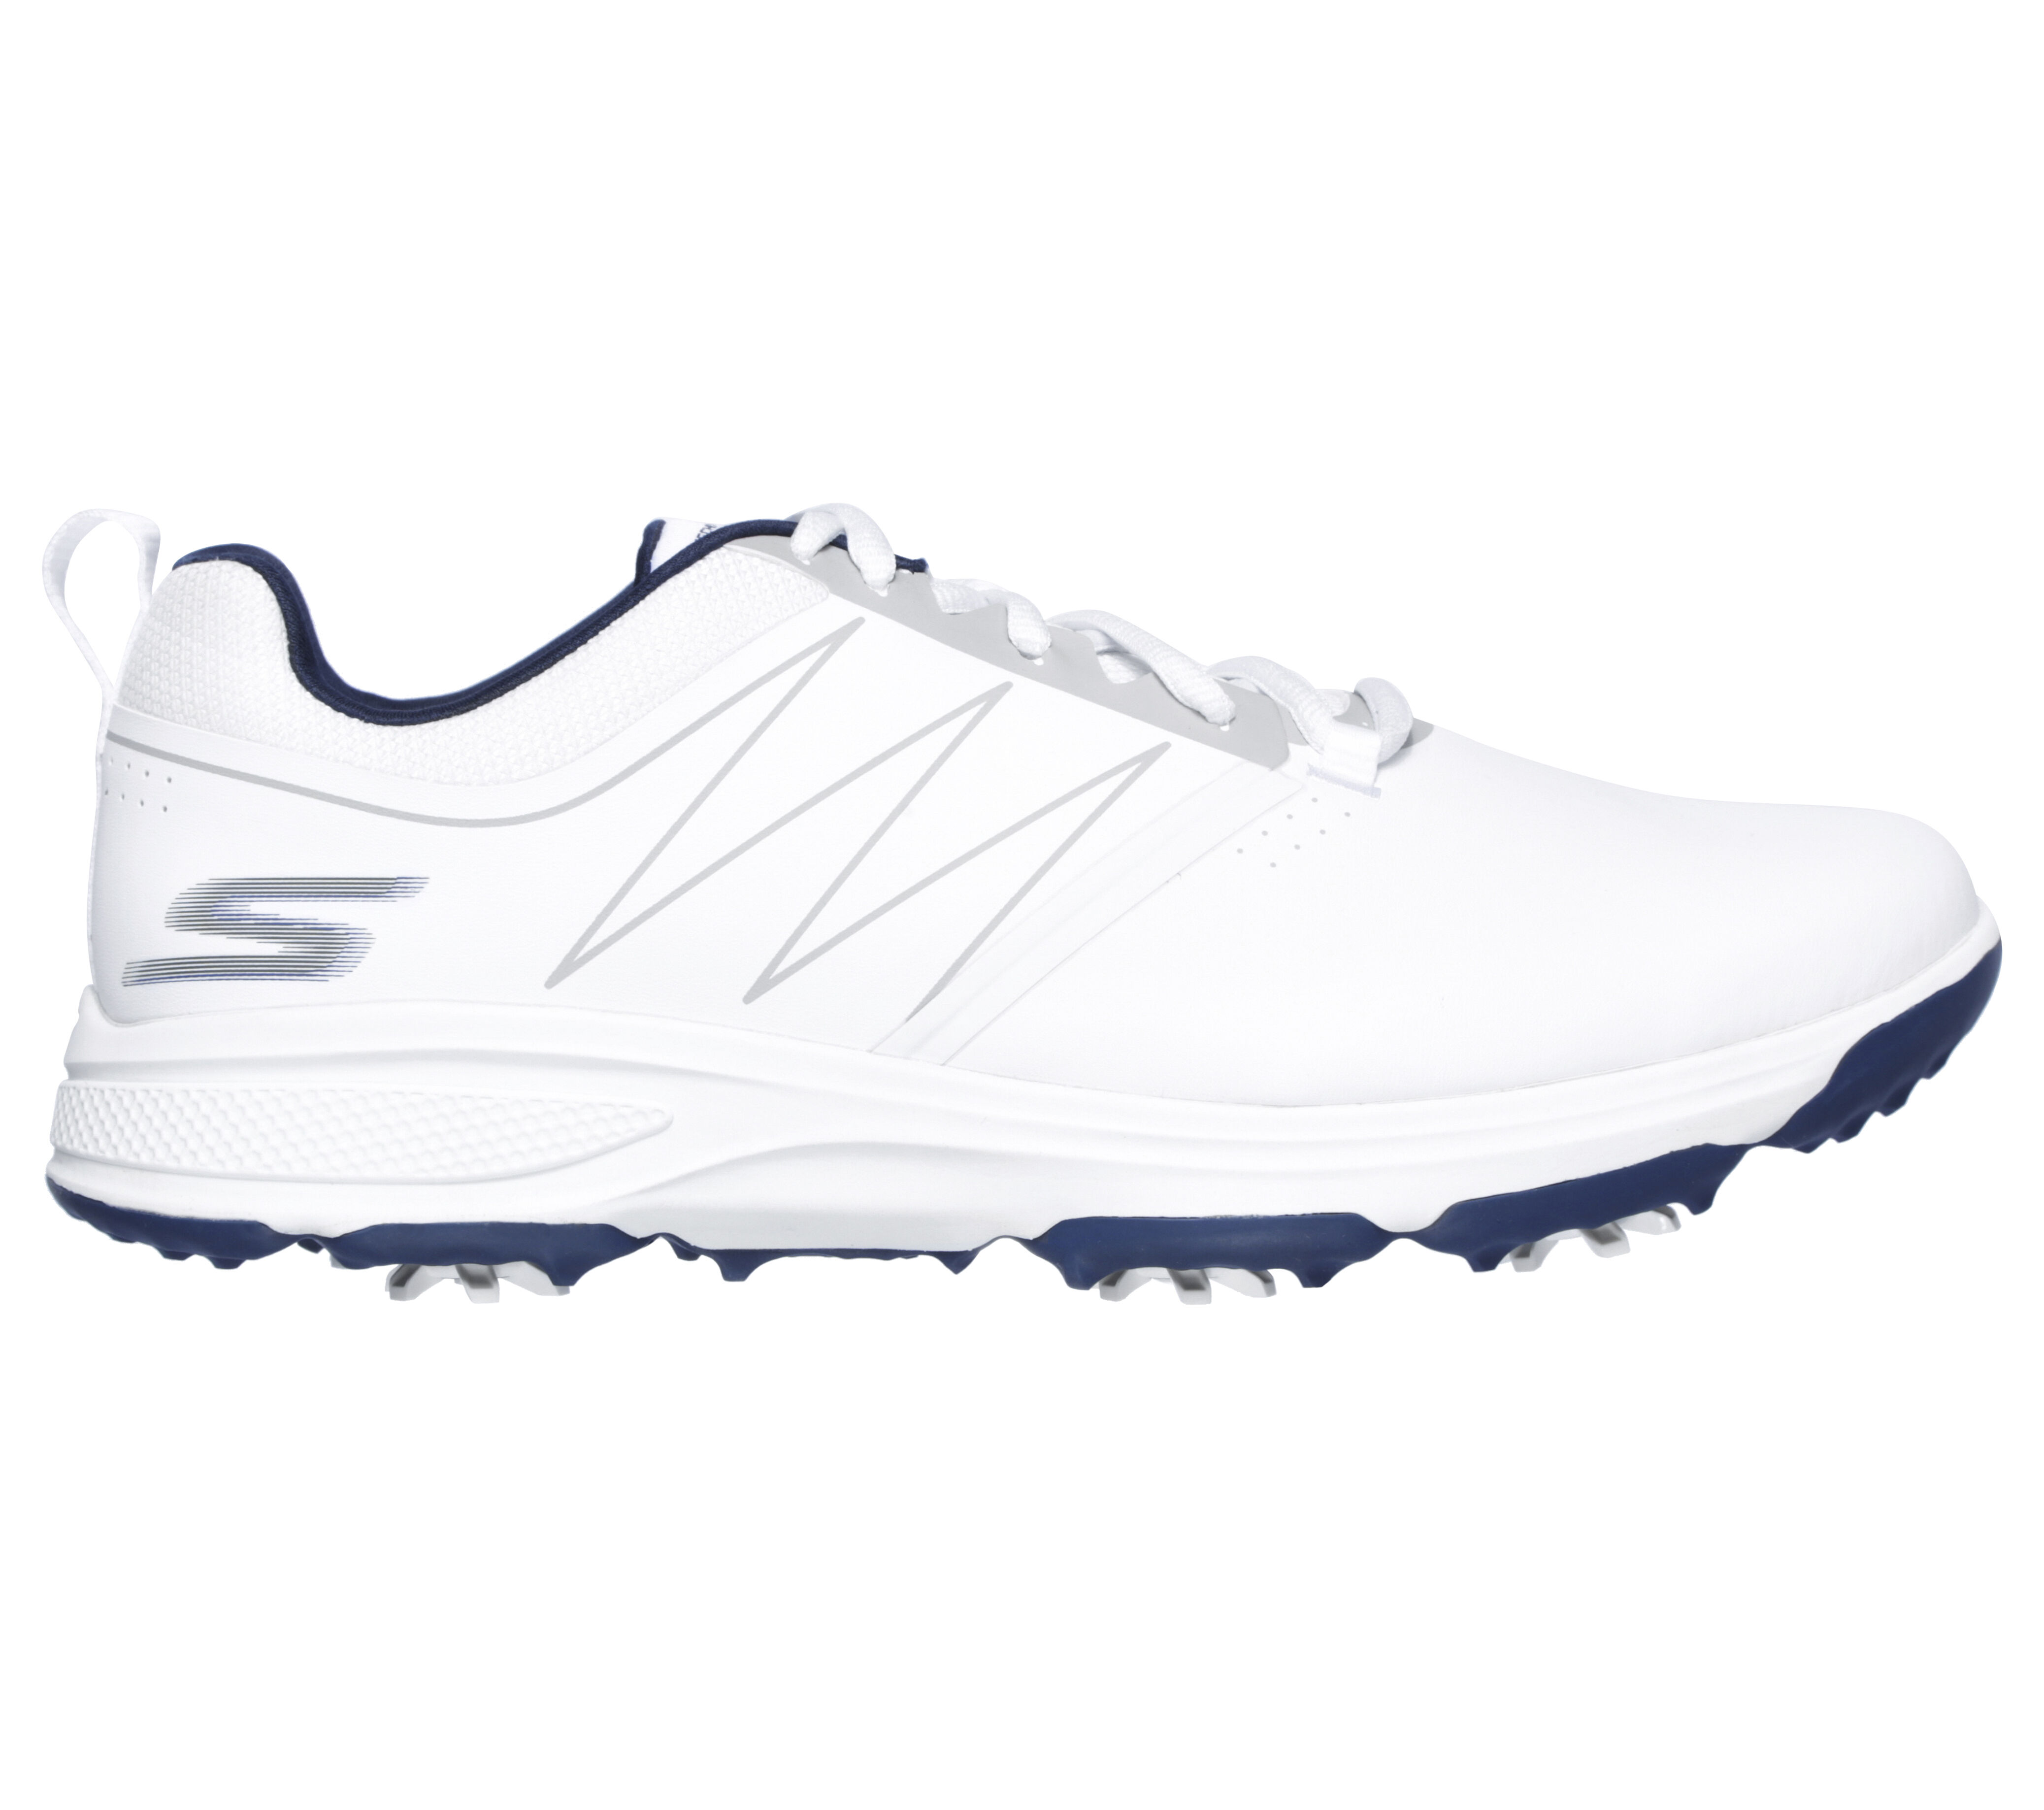 men's skechers golf shoes wide width